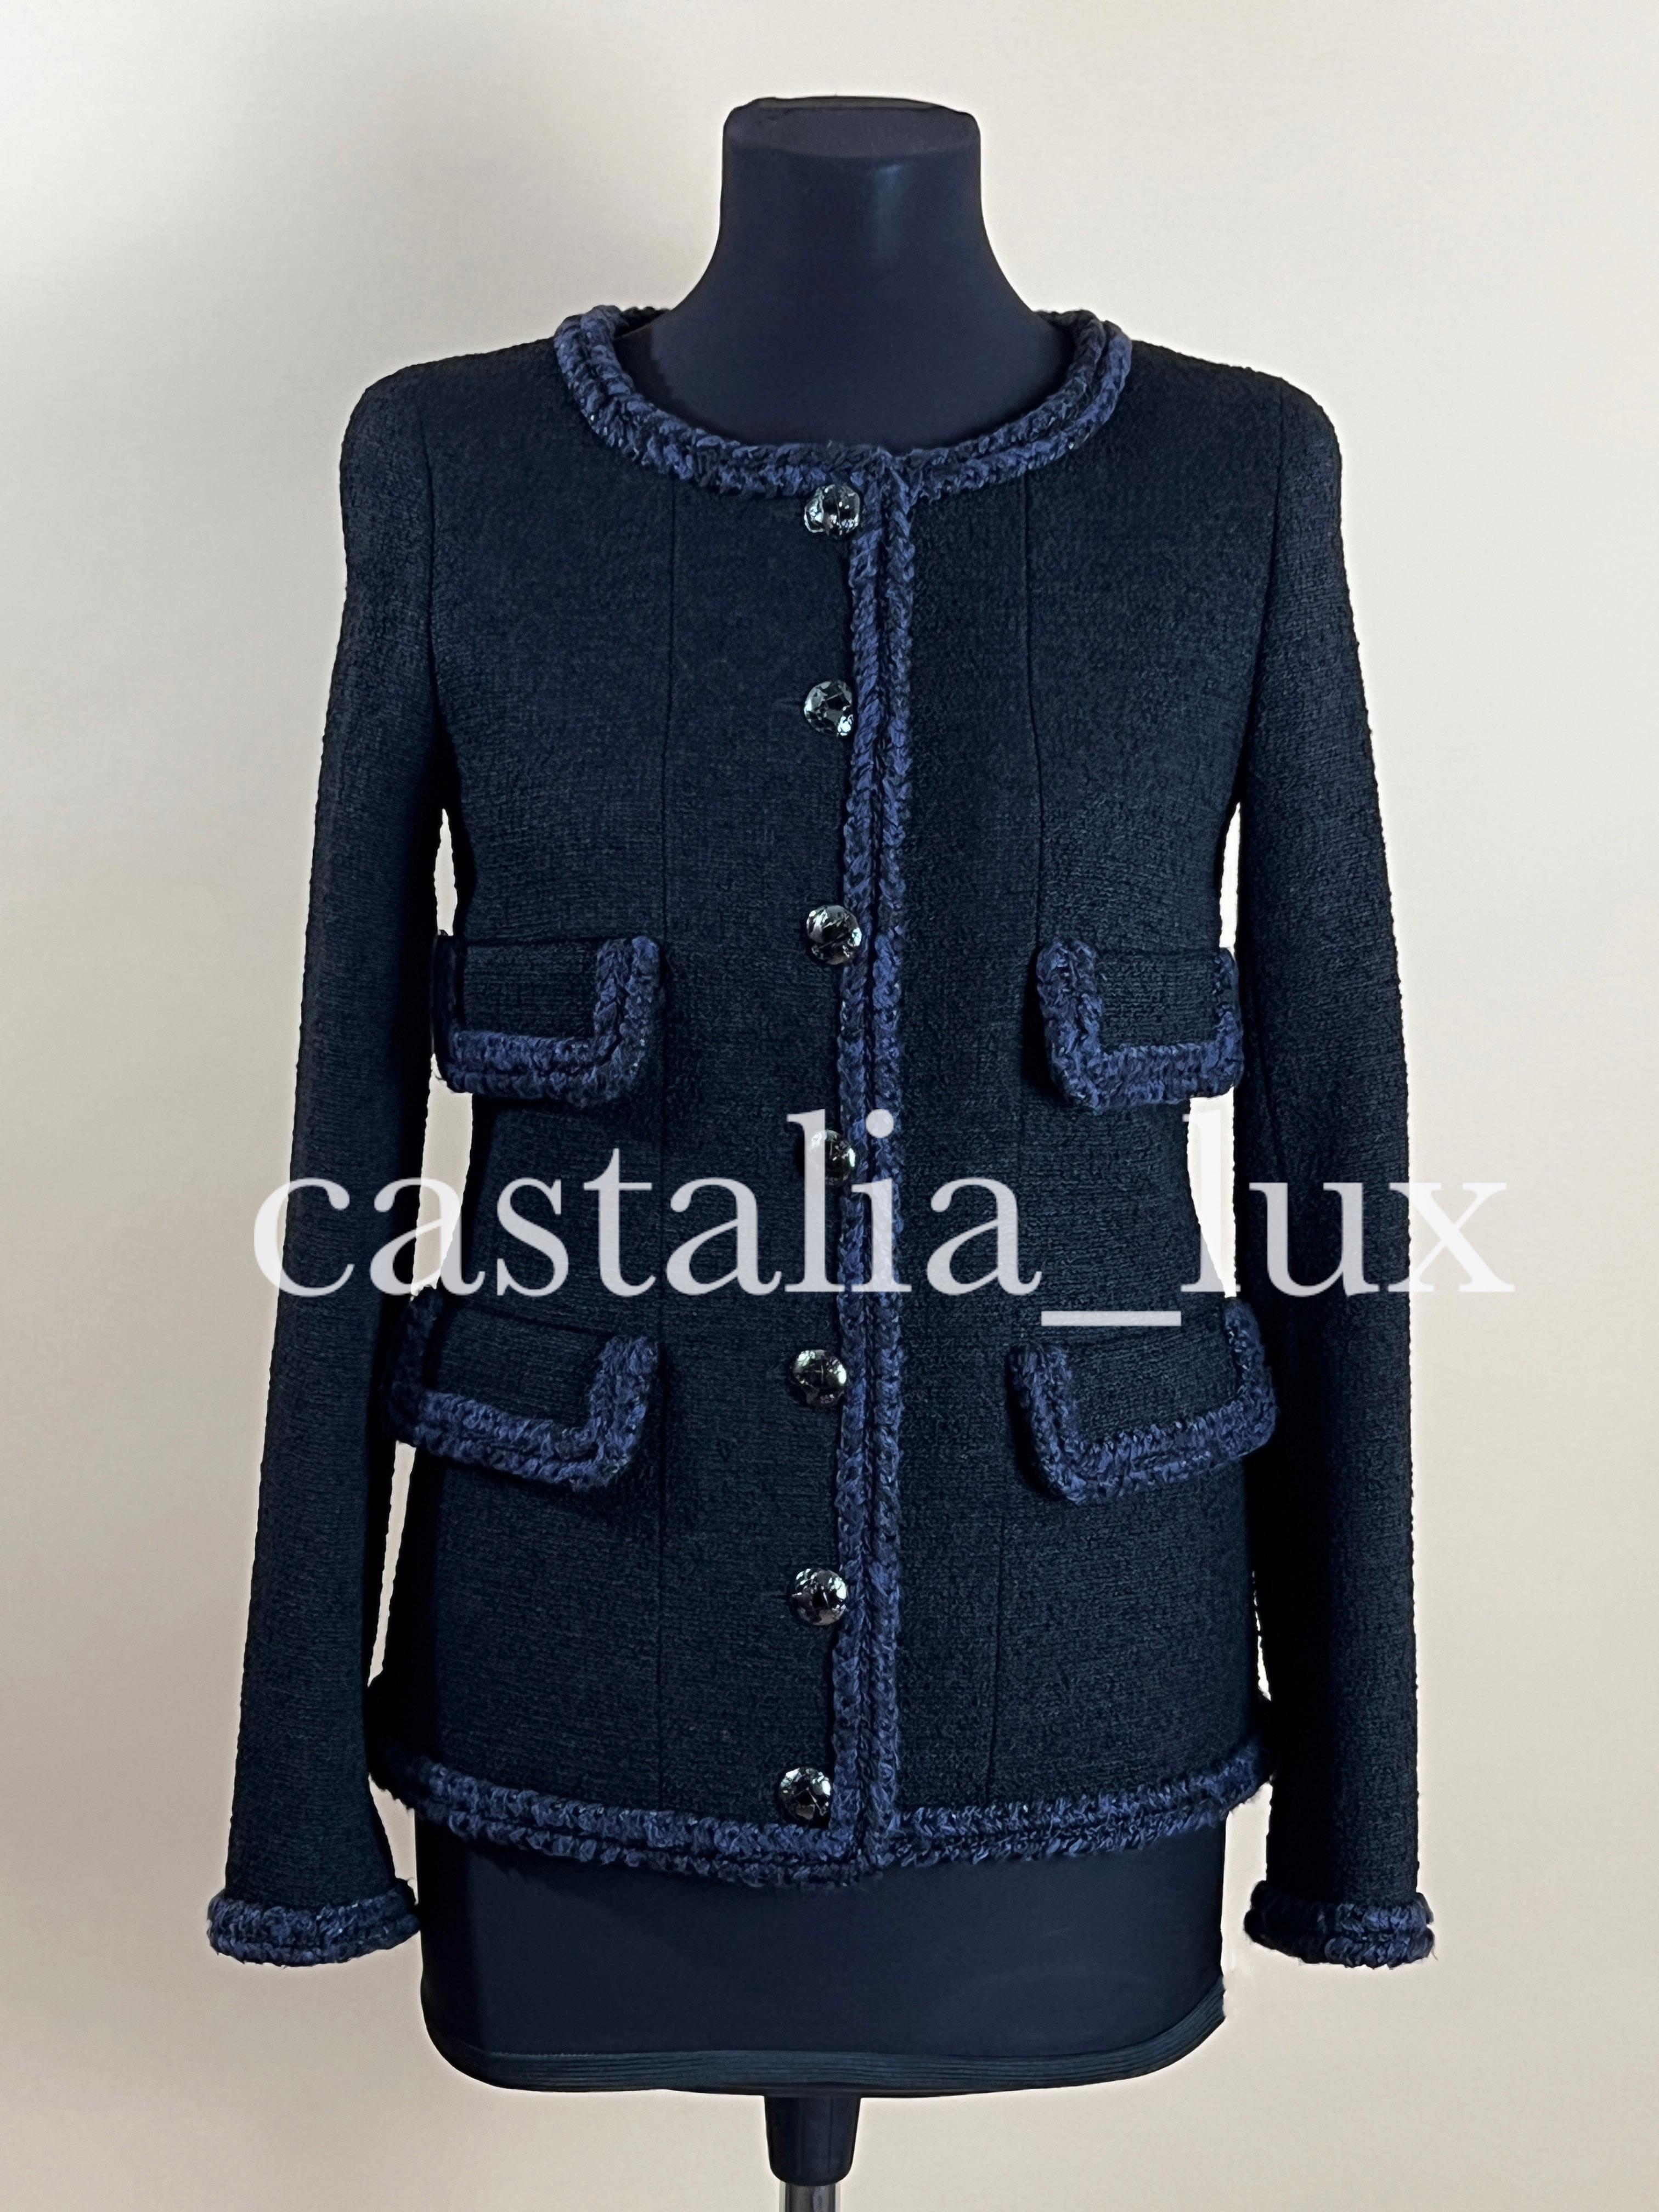 Chanel Iconic Keira Knightley Style Black Tweed Jacket 8